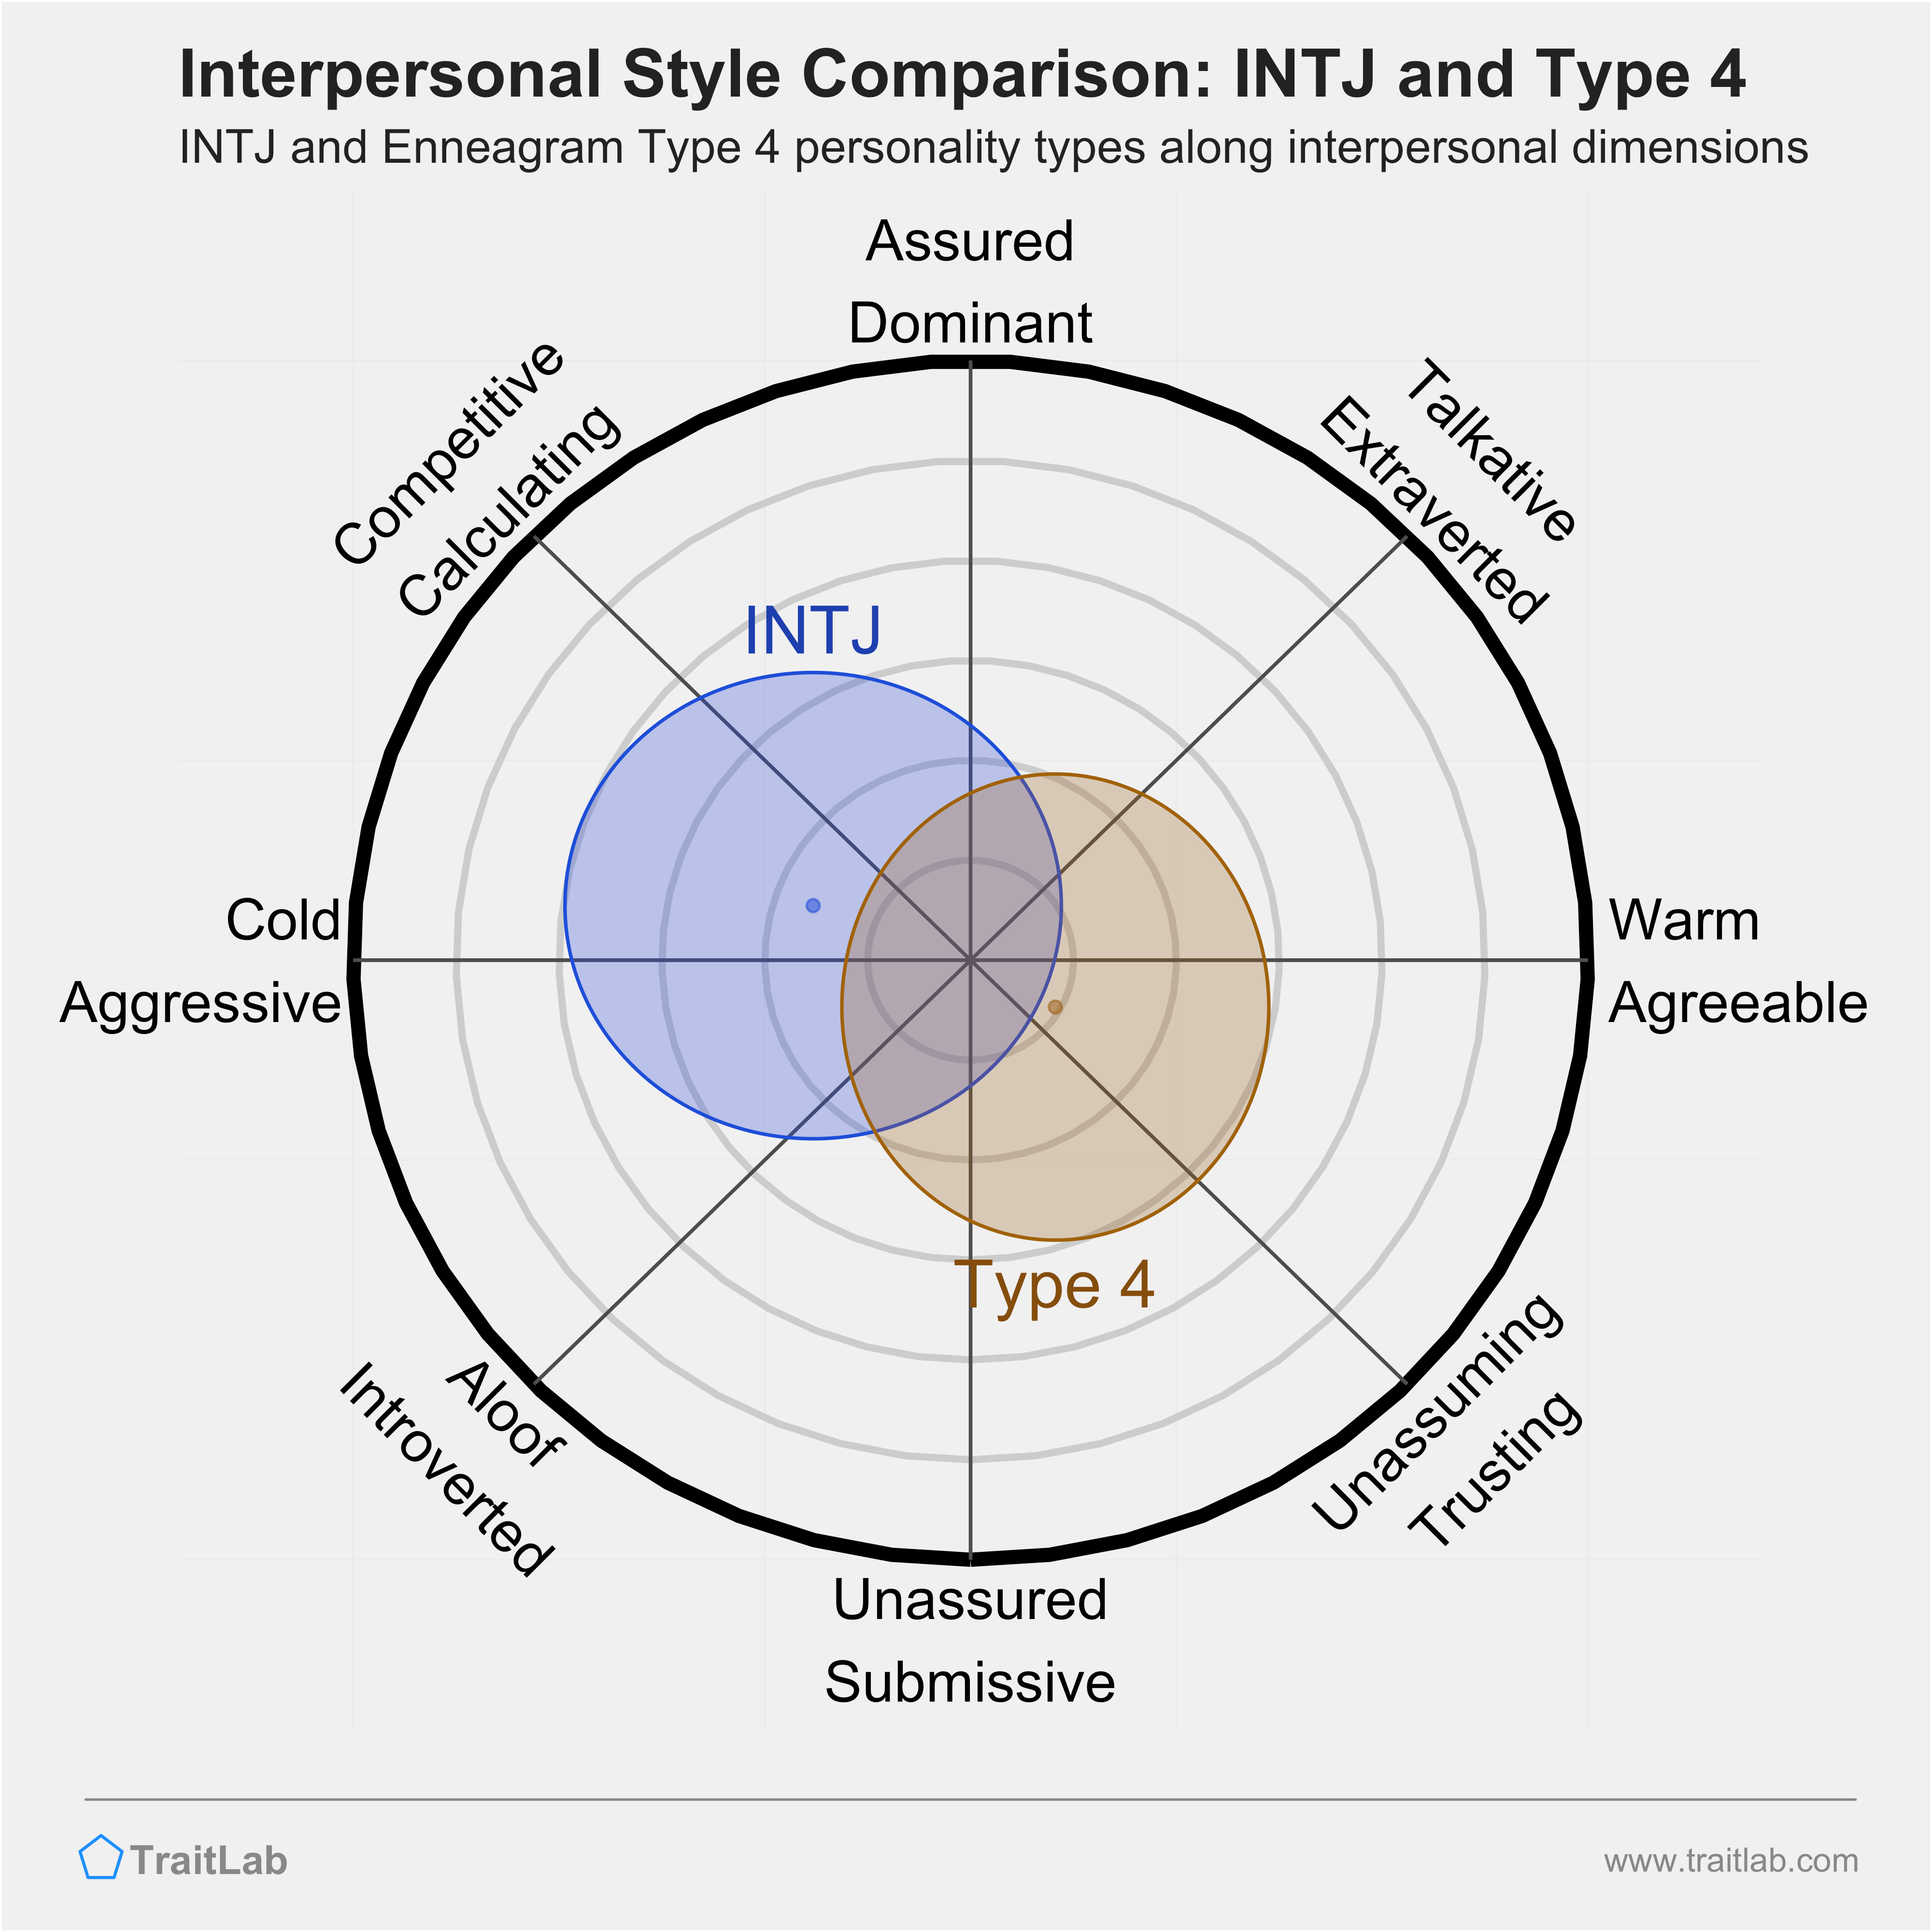 Enneagram INTJ and Type 4 comparison across interpersonal dimensions